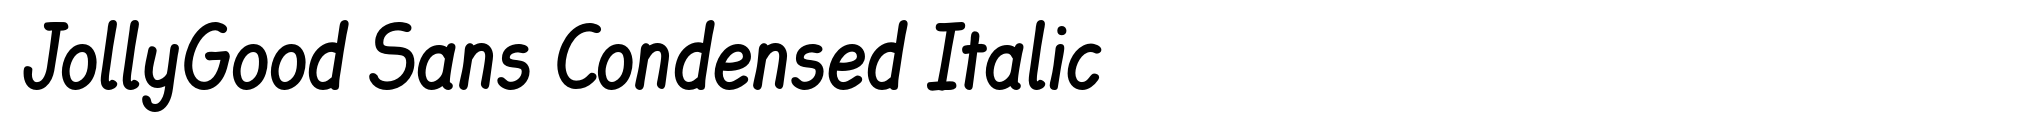 JollyGood Sans Condensed Italic image